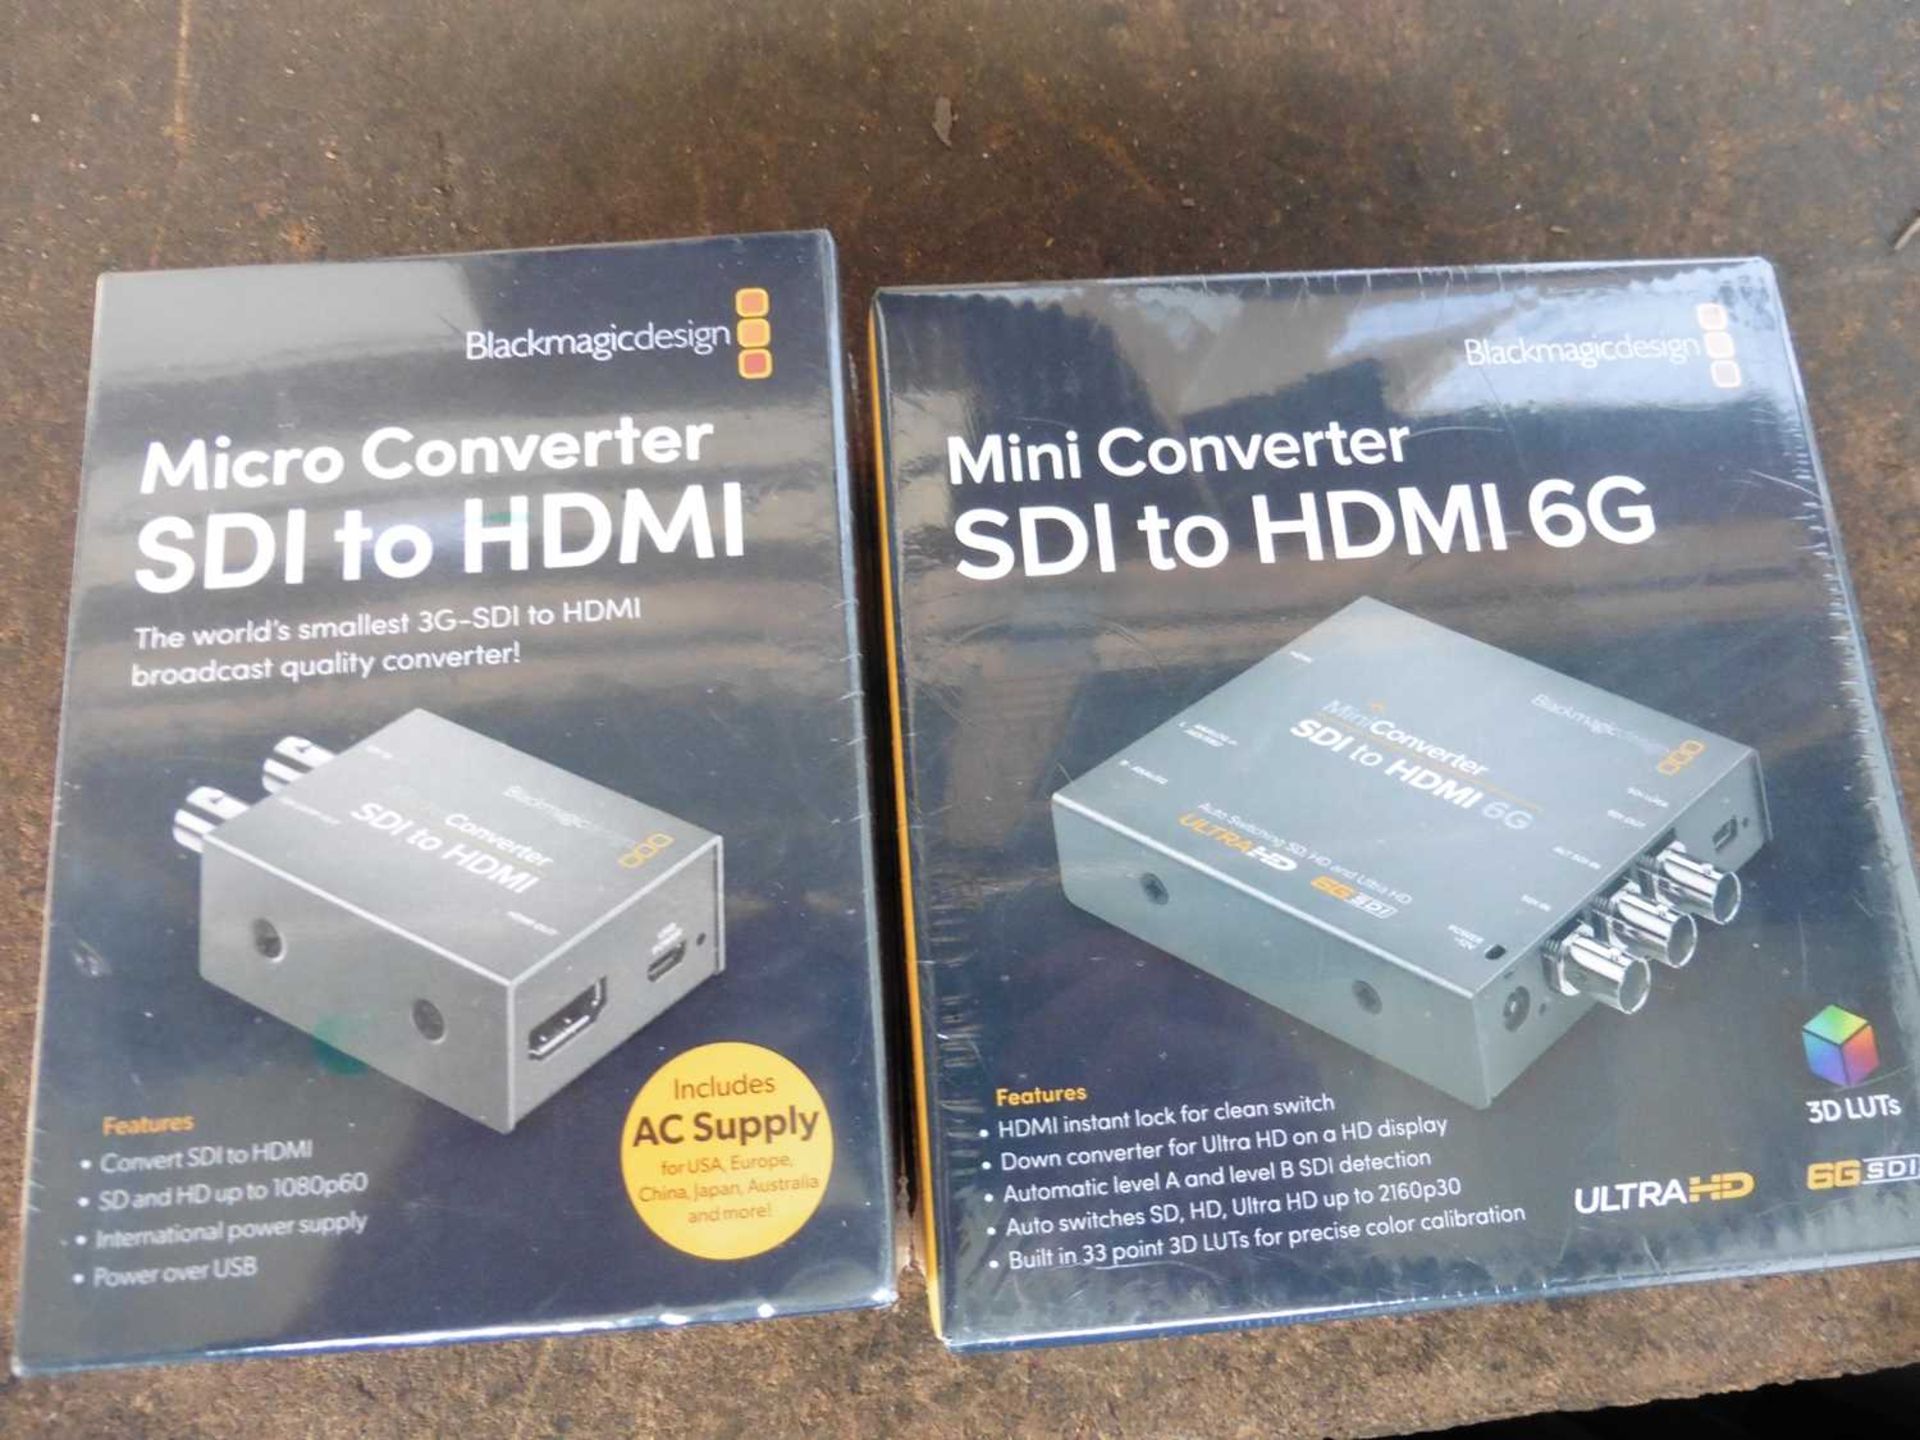 +VAT 1 Blackmagicdesign mini converter SDi to HDMi 6G and 1 Blackmagicdesign Micro convertor SDi